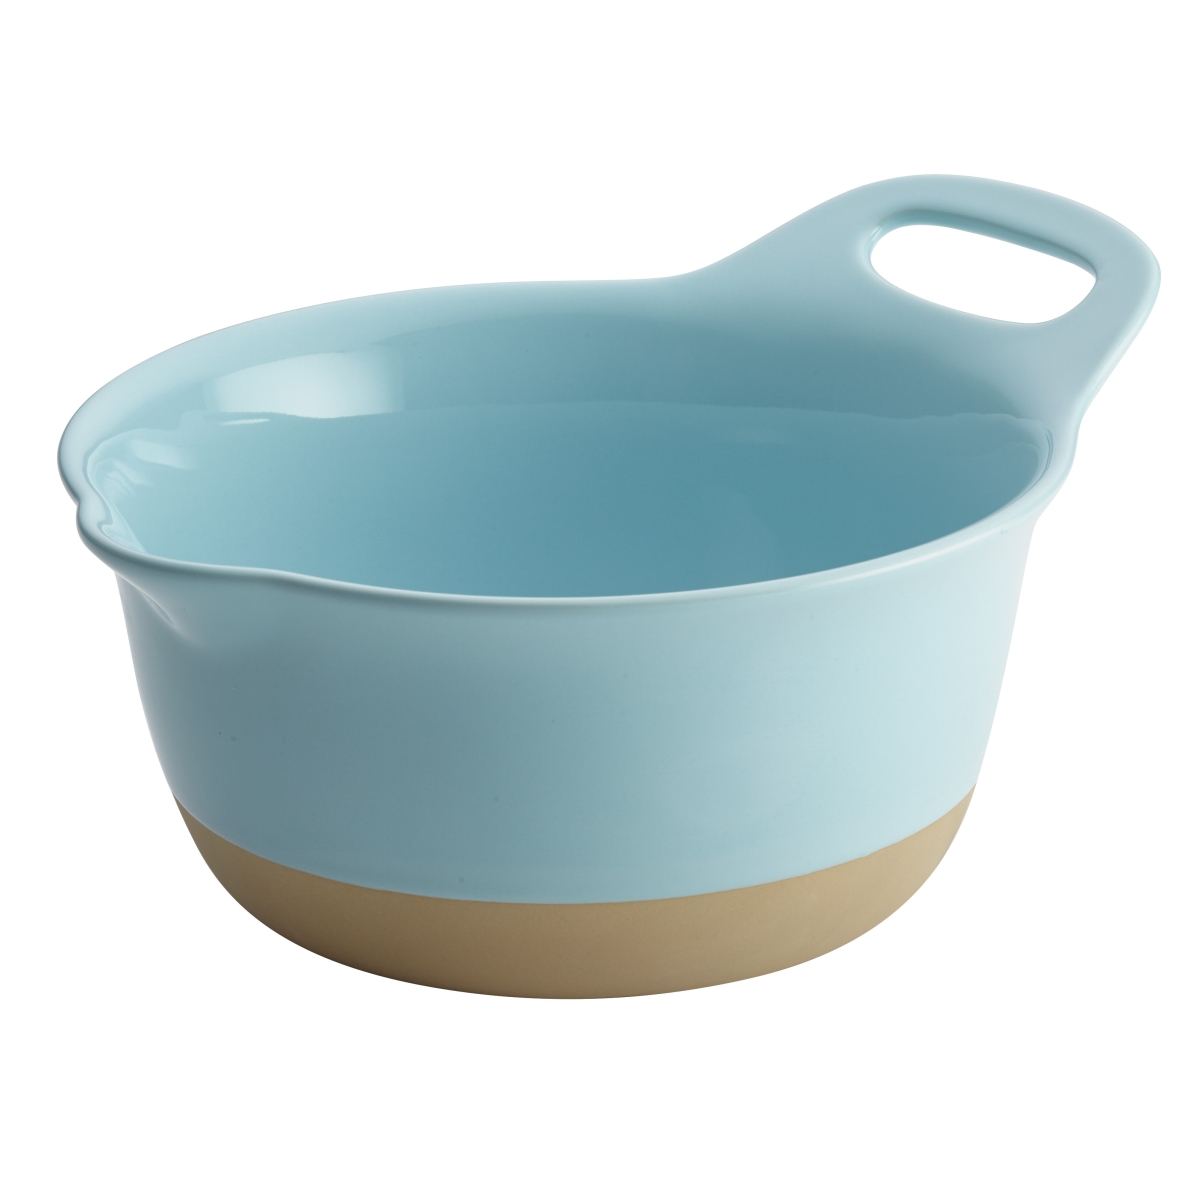 47493 Collection Ceramic Mixing Bowl Set, Light Blue, 3 Qt.